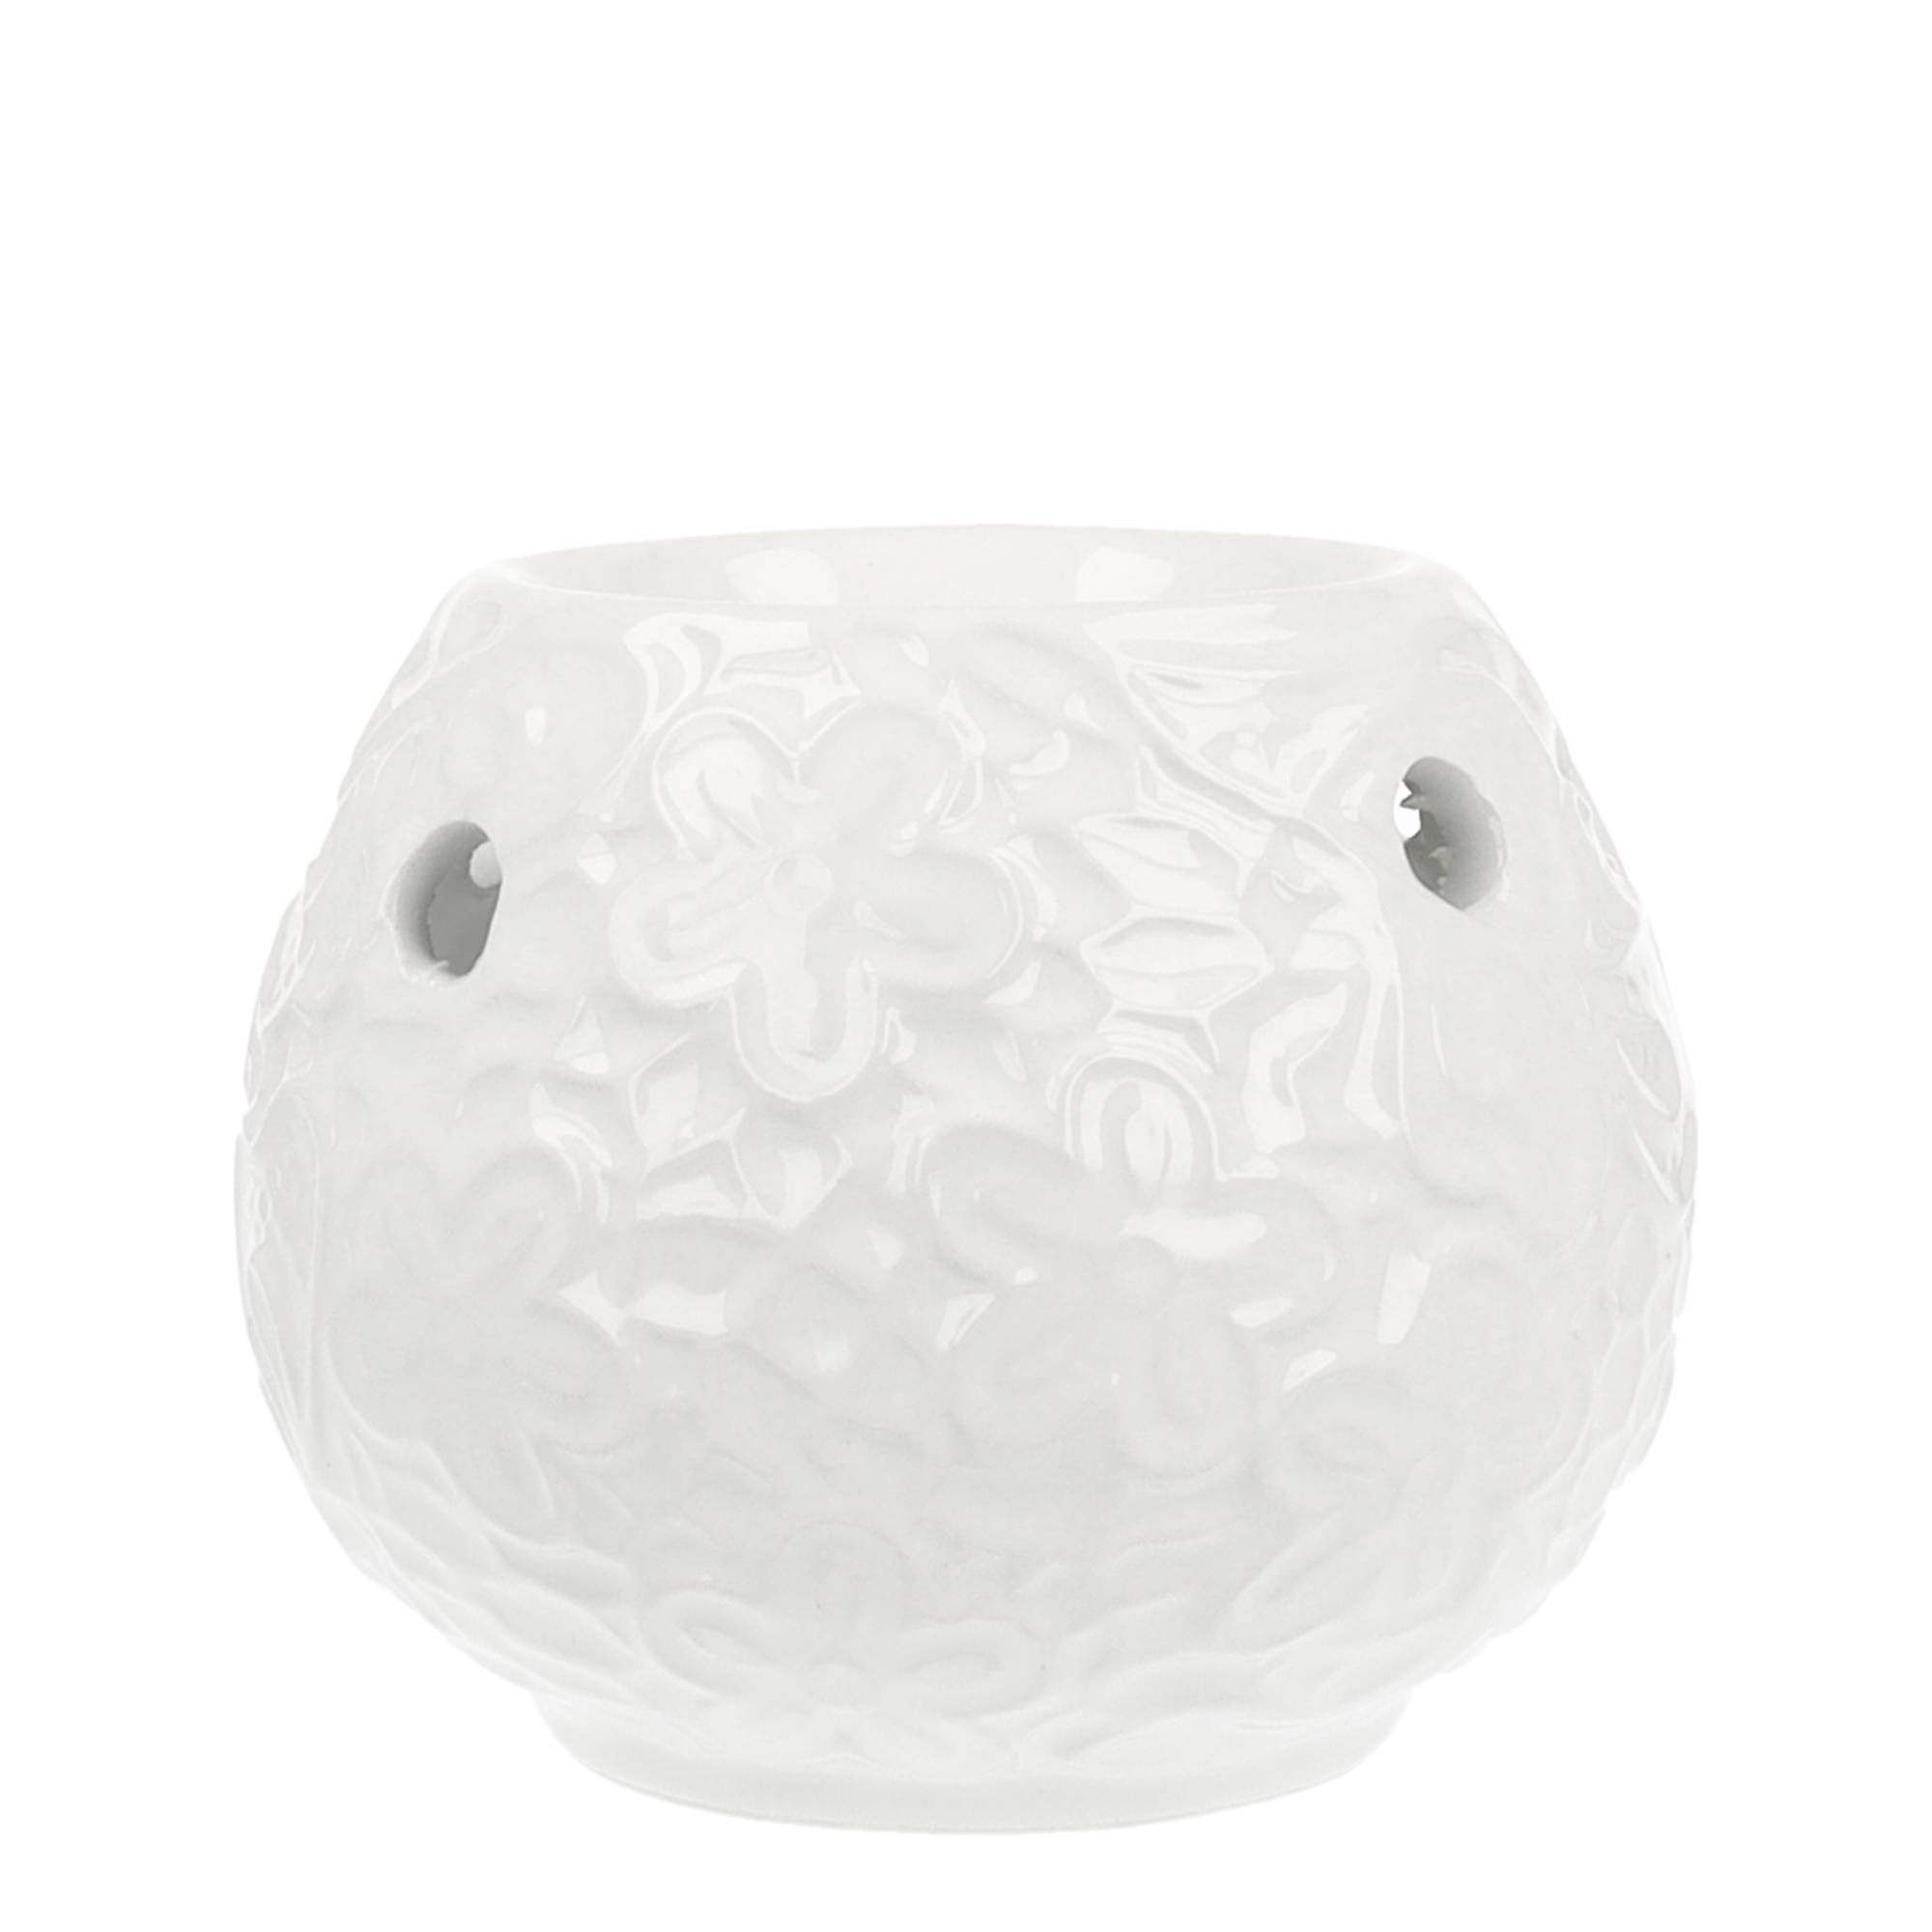 Scentchips® Ceramic Leafs White scented wax burner